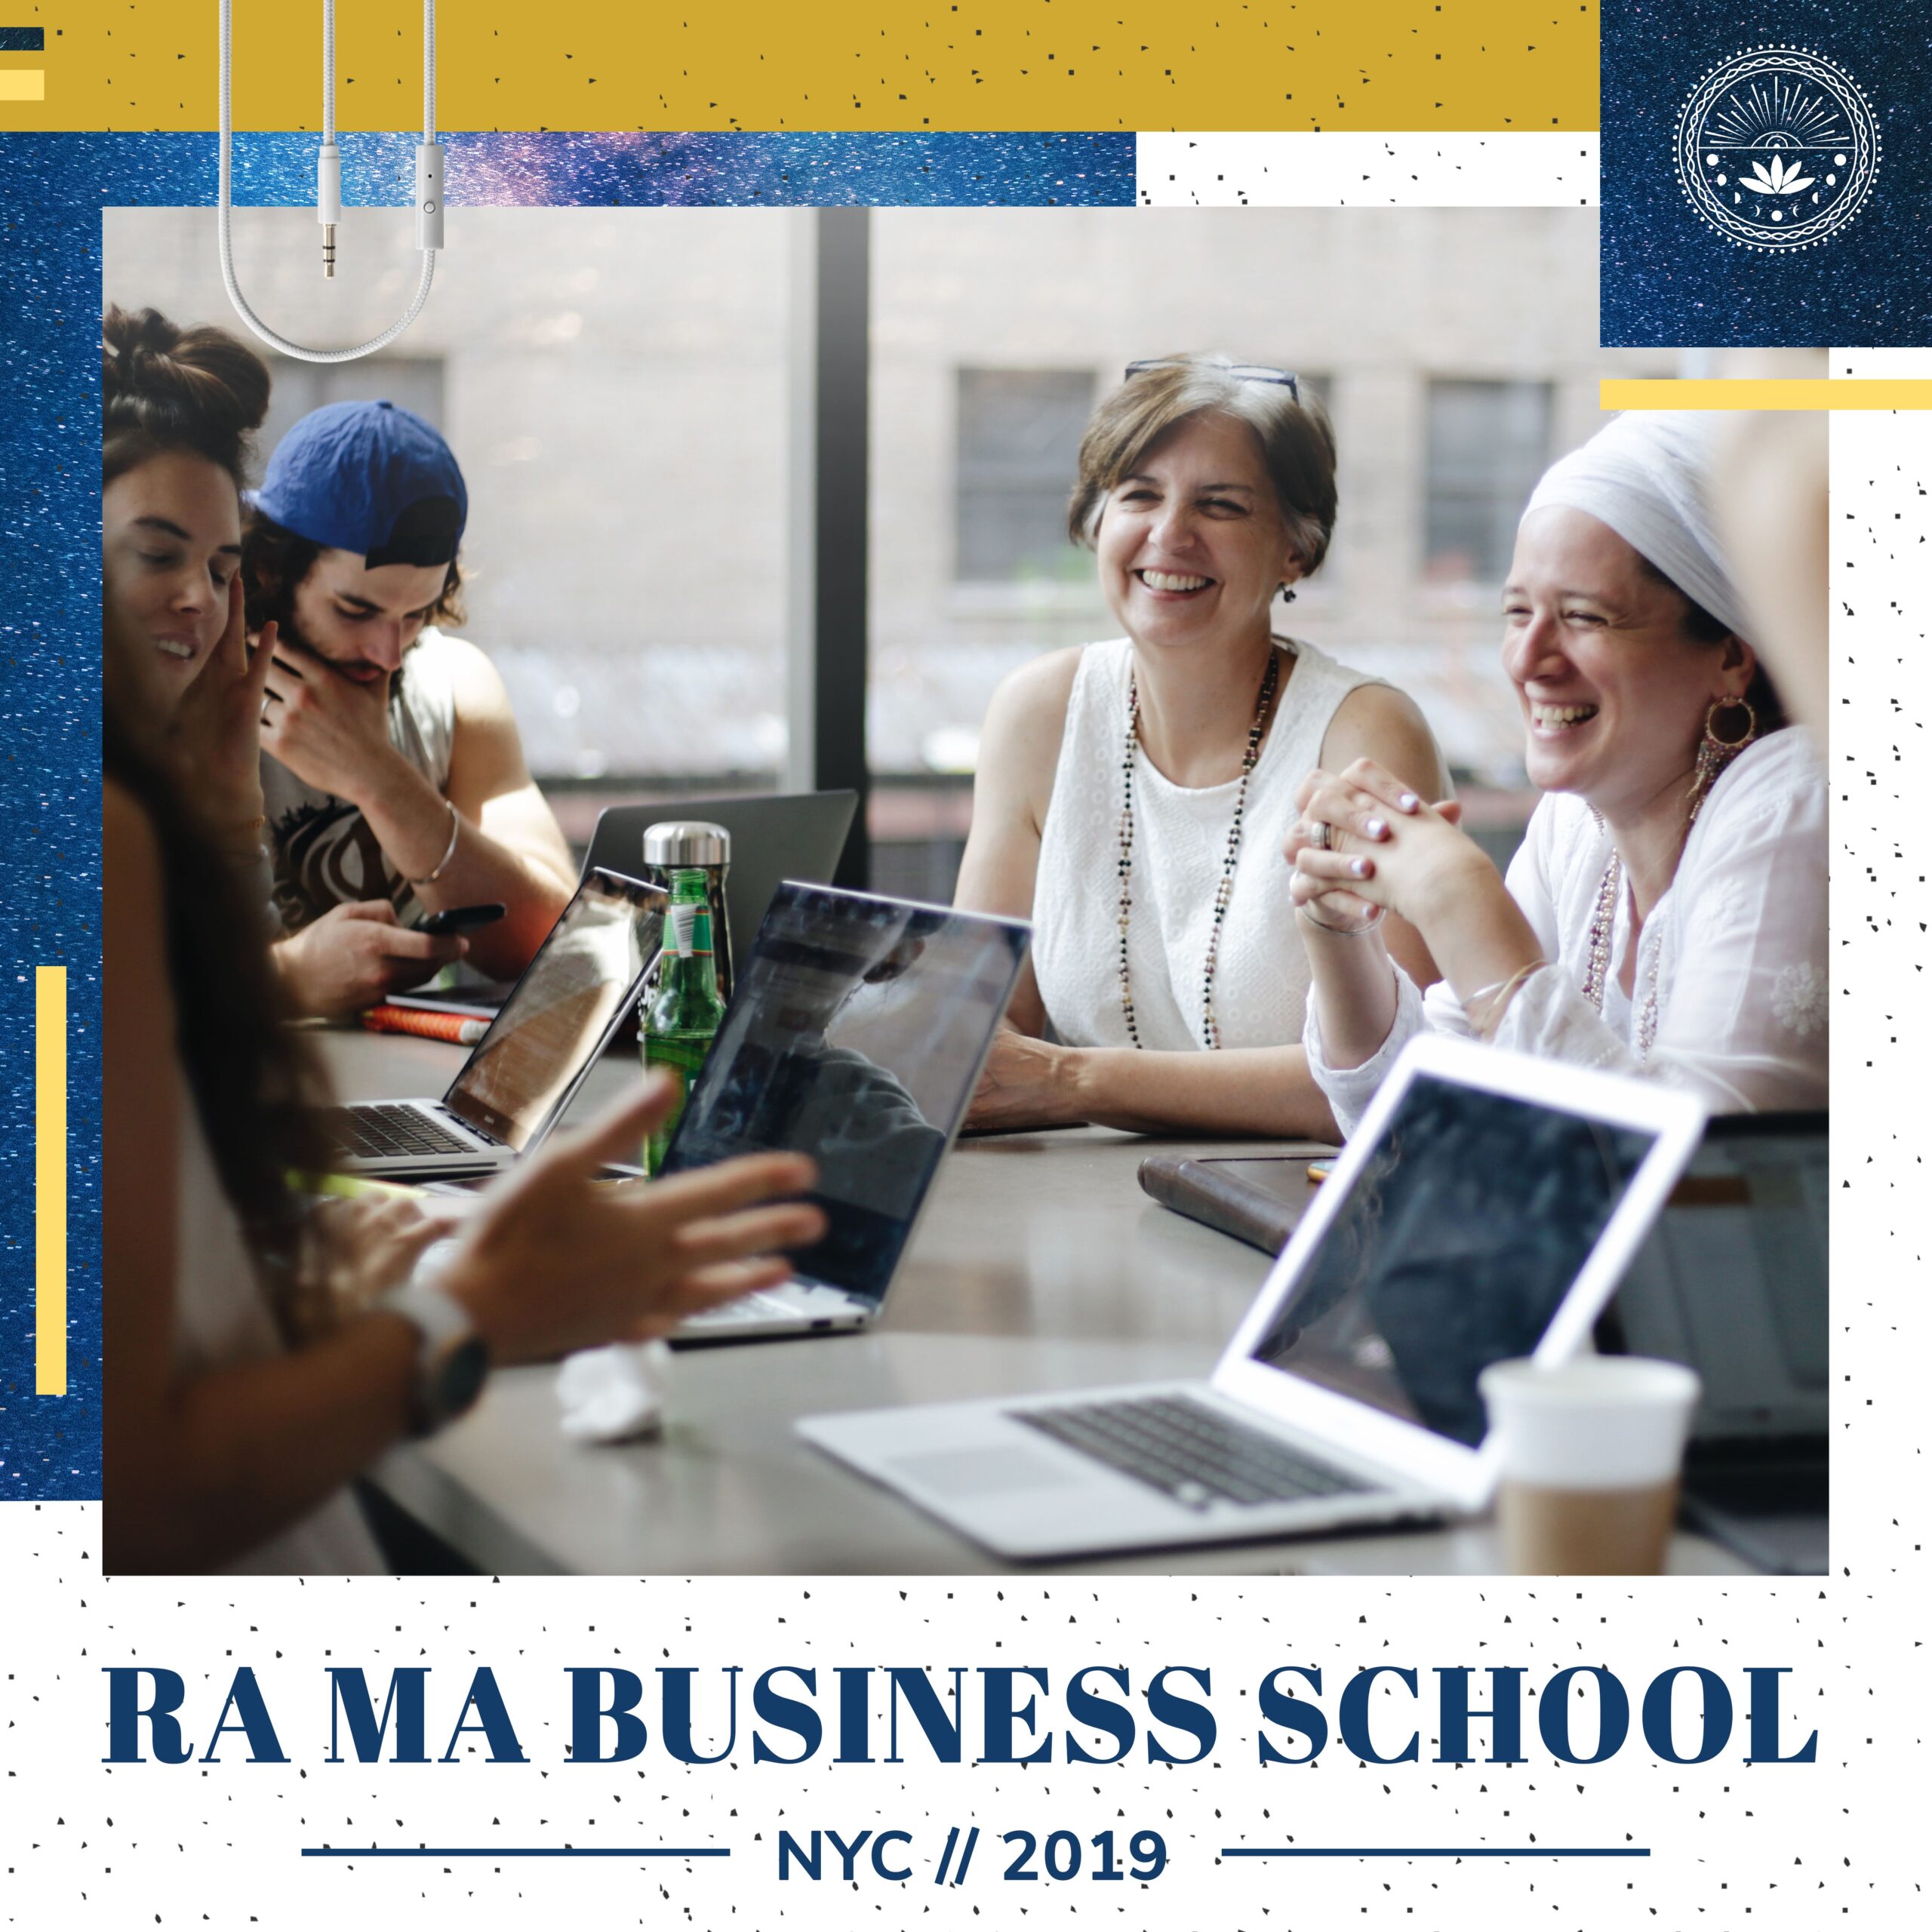 RA MA Business School NYC 2019